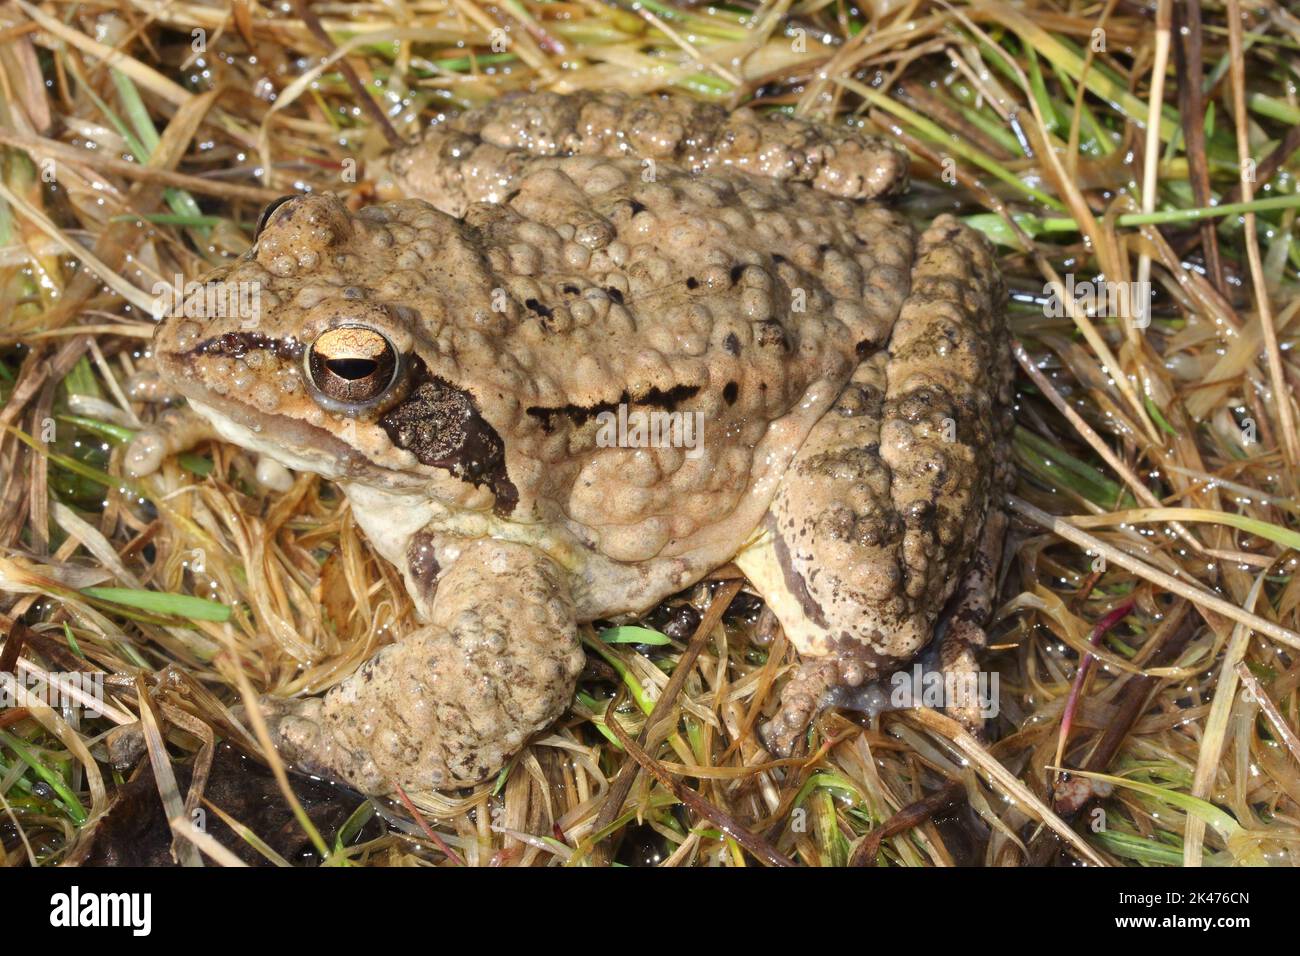 The agile frog (Rana dalmatina) with skin disease in a natural habitat Stock Photo